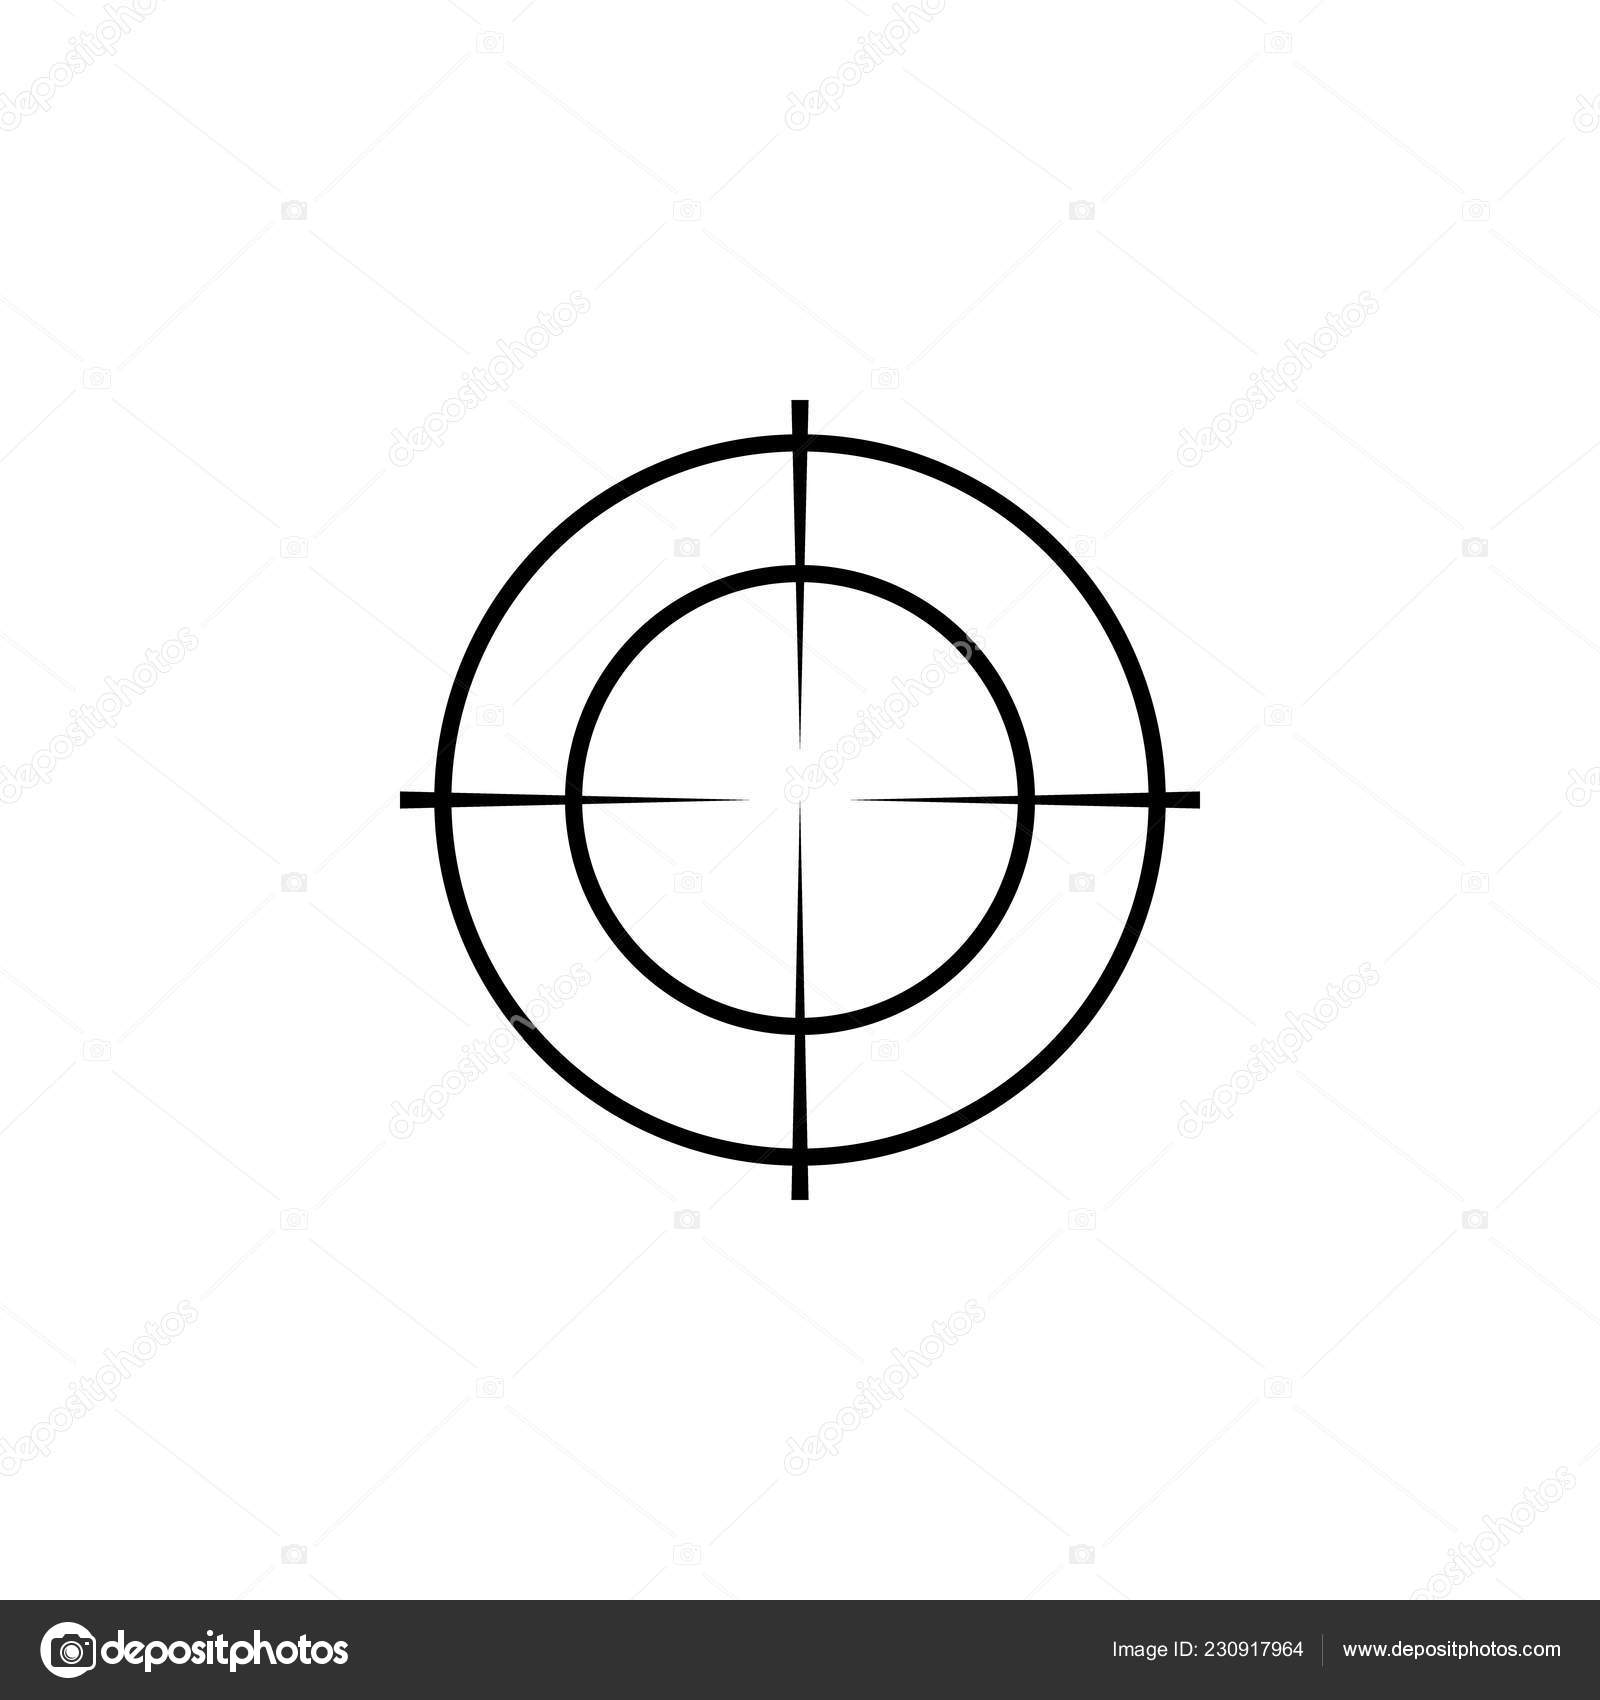 sniper scope crosshairs